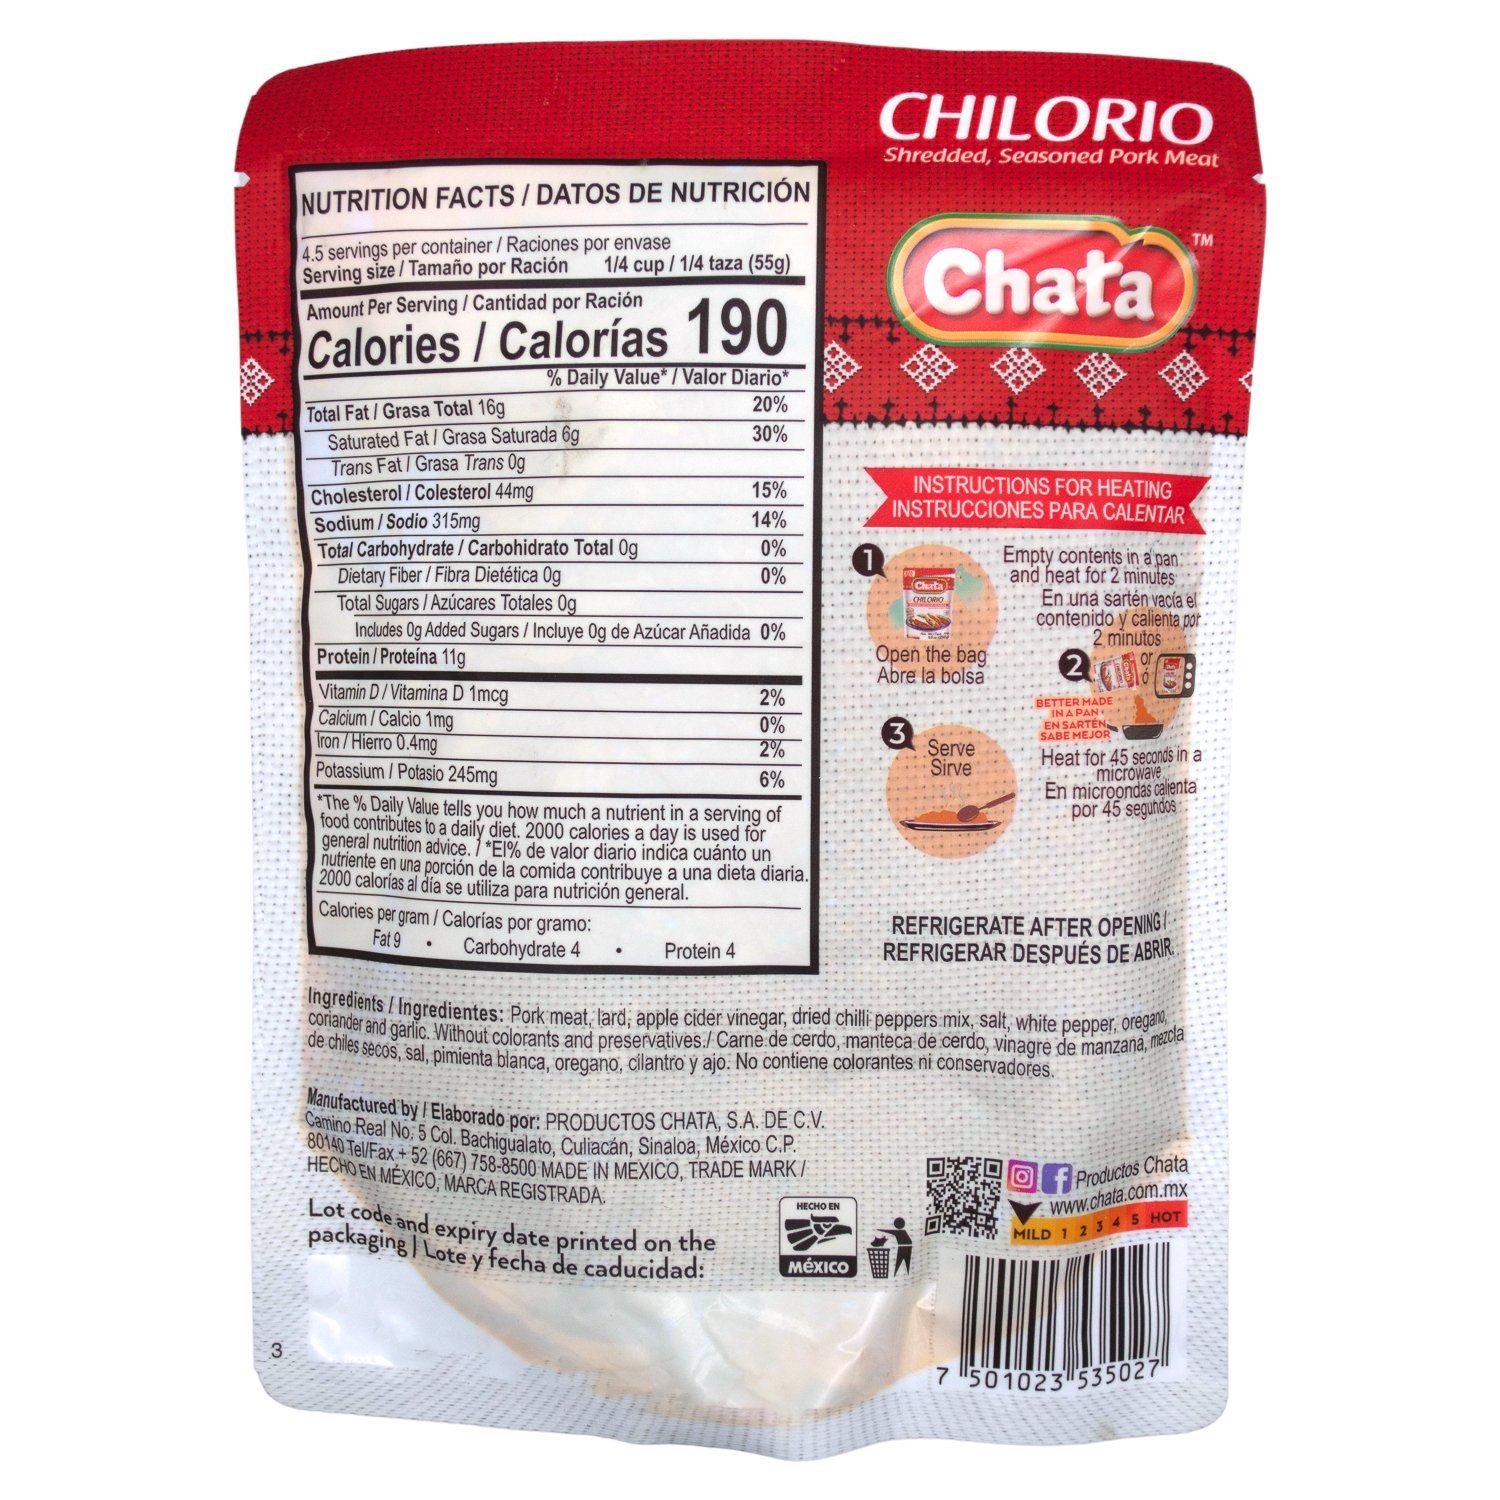 Chata Chilorio Shredded Seasoned Meat Chata 